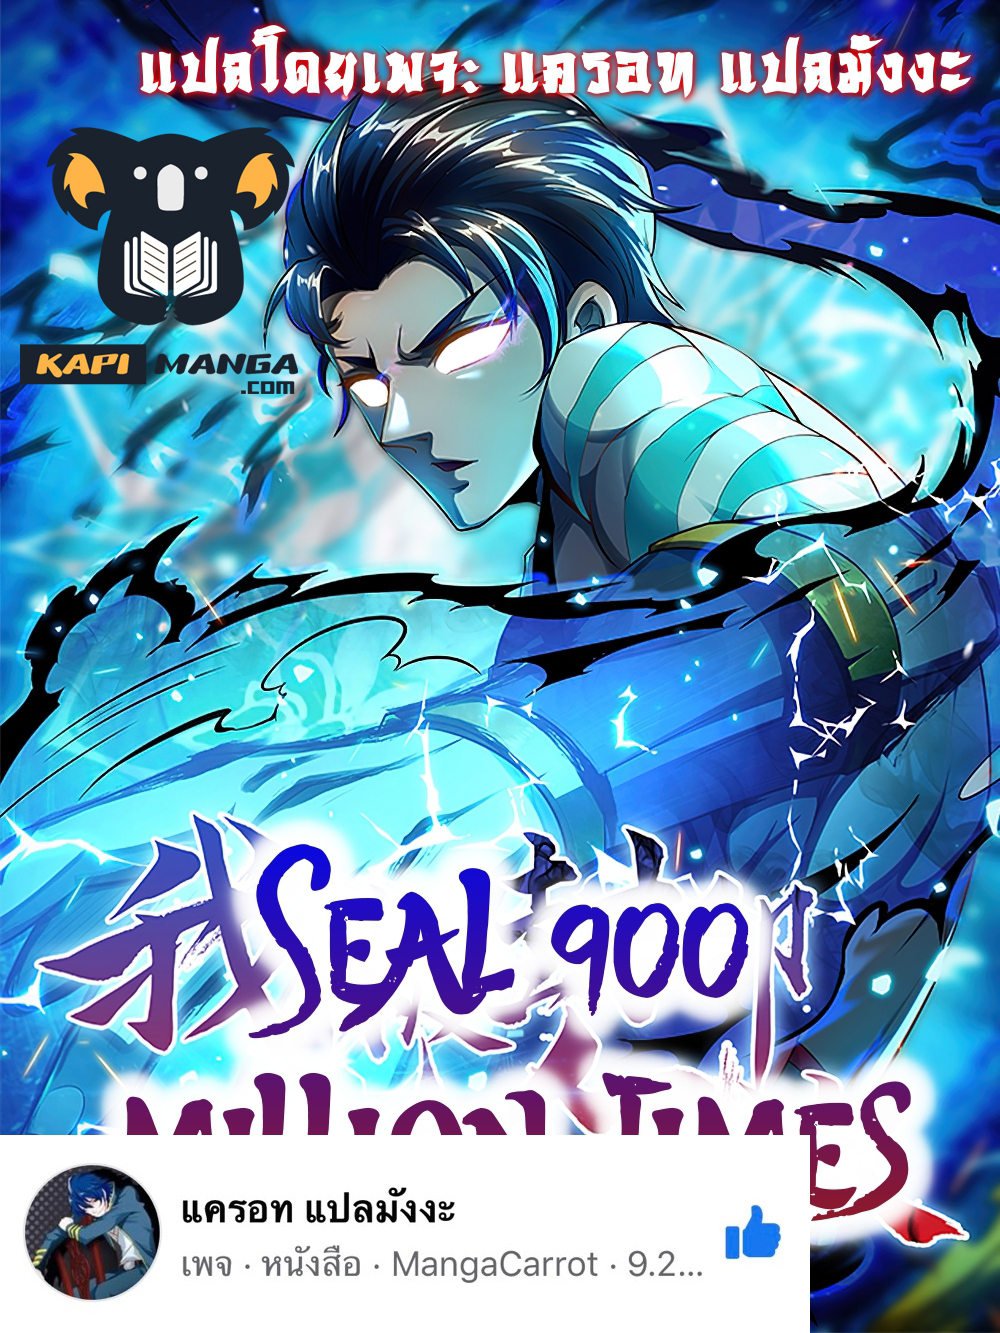 Seal 900 Million Times 26 (1)